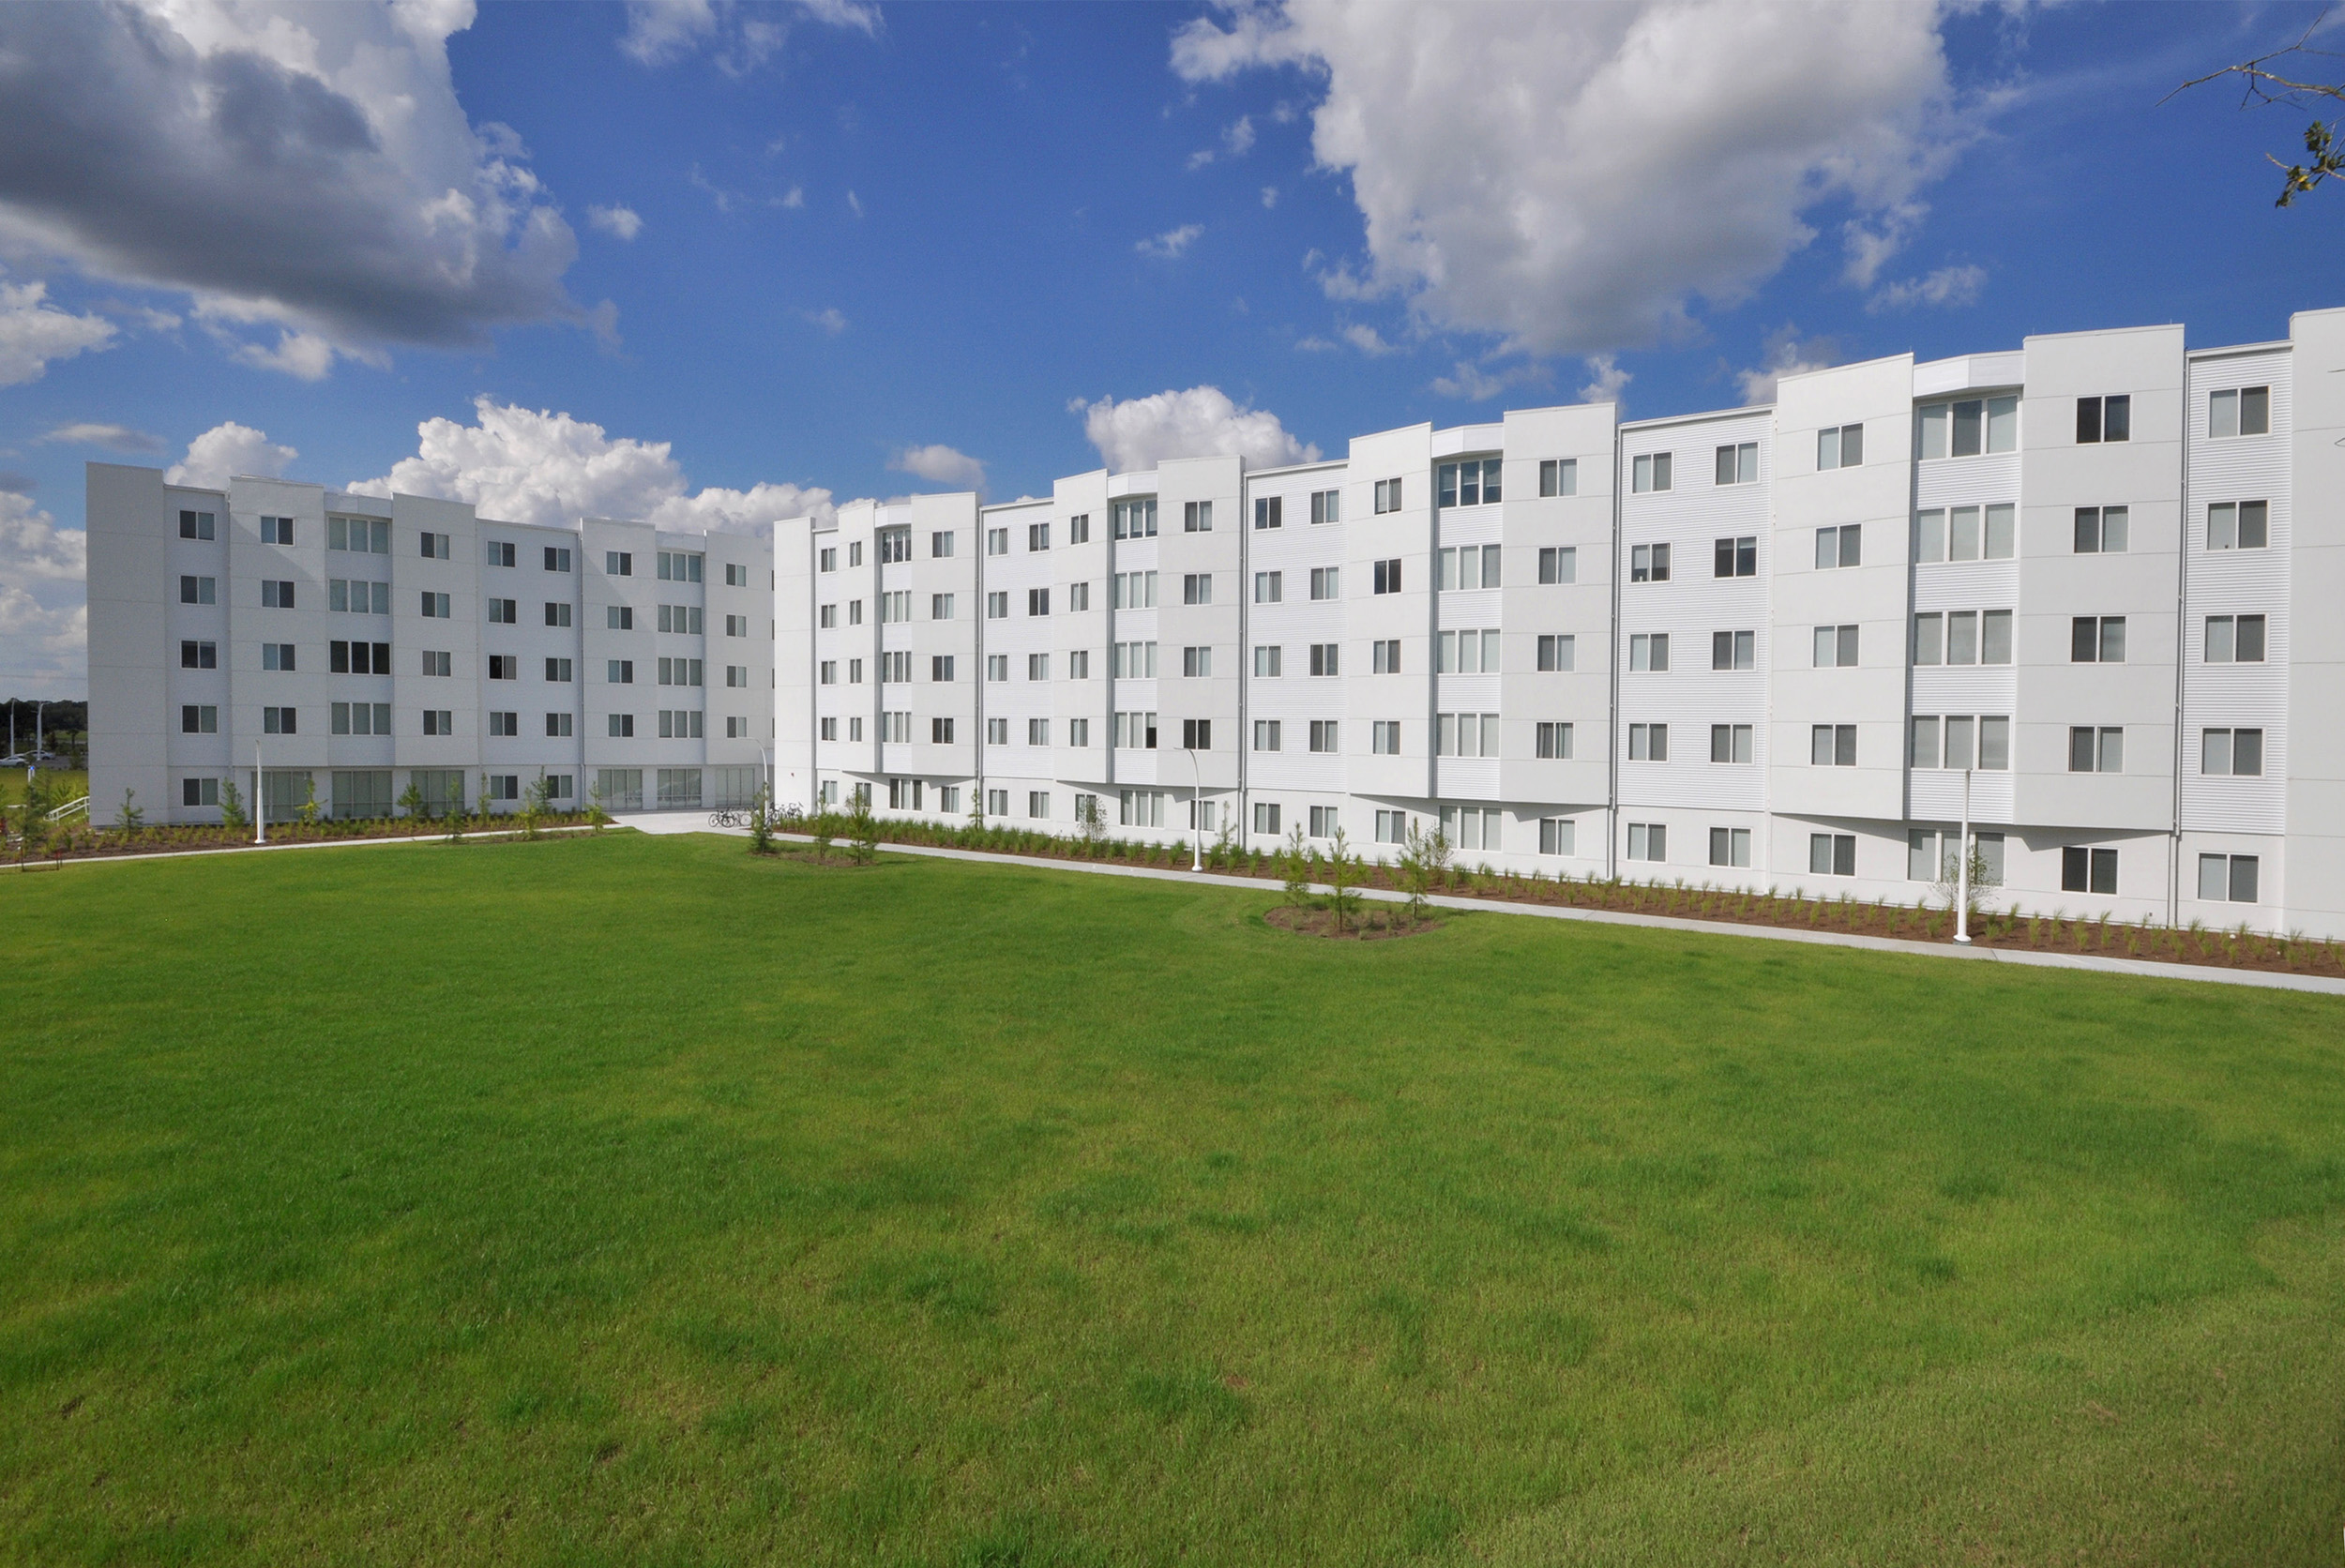 Student housing white multi story facility